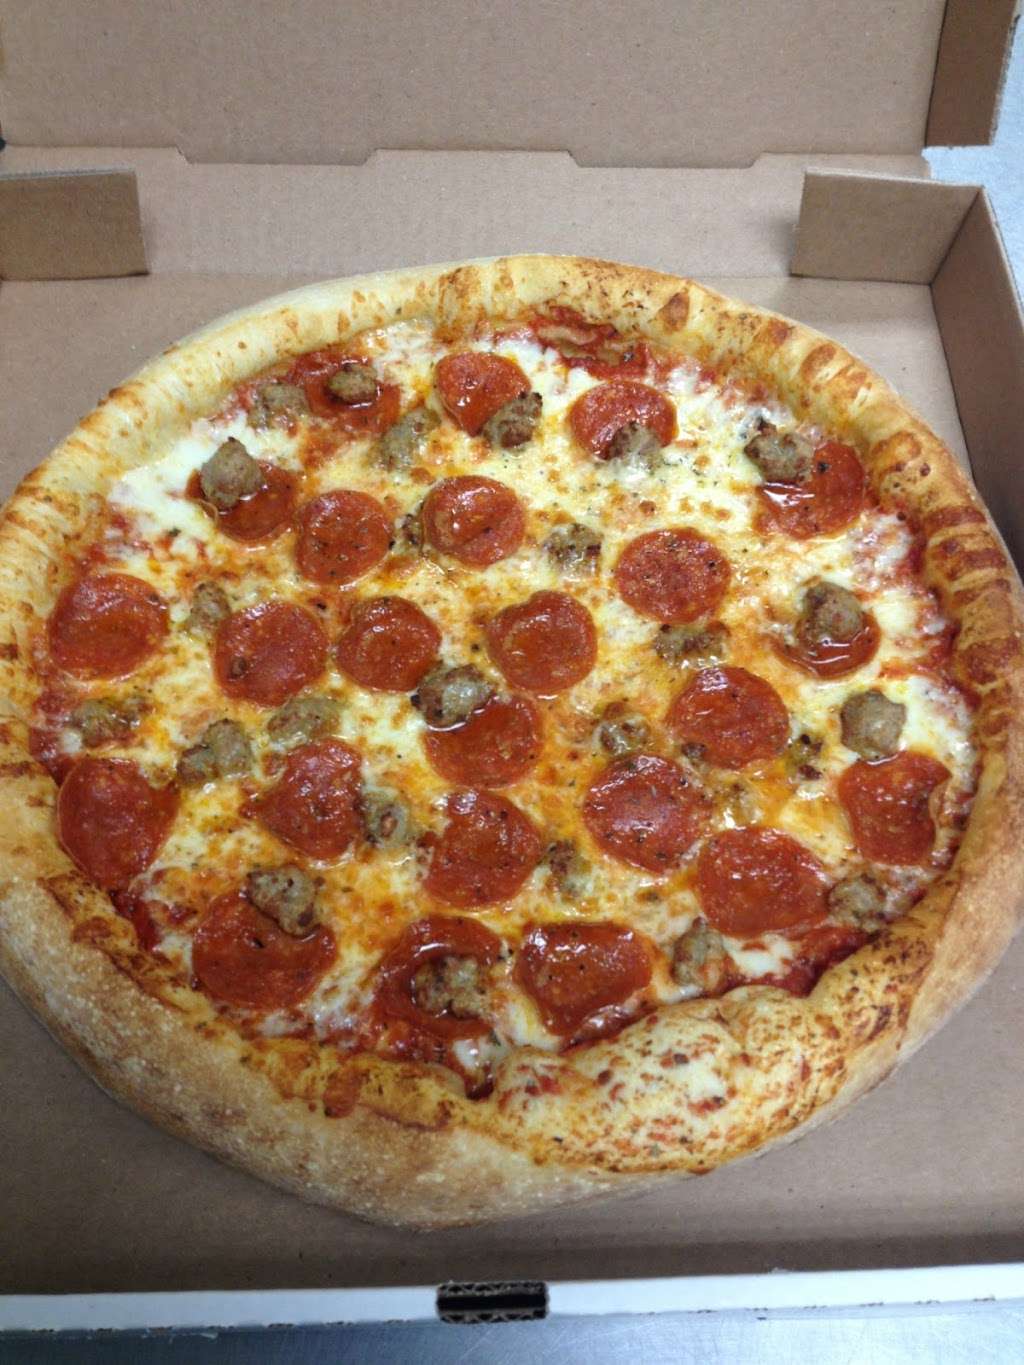 Jackpot Pizza | 6450 Louetta Rd, Spring, TX 77379 | Phone: (281) 257-0762